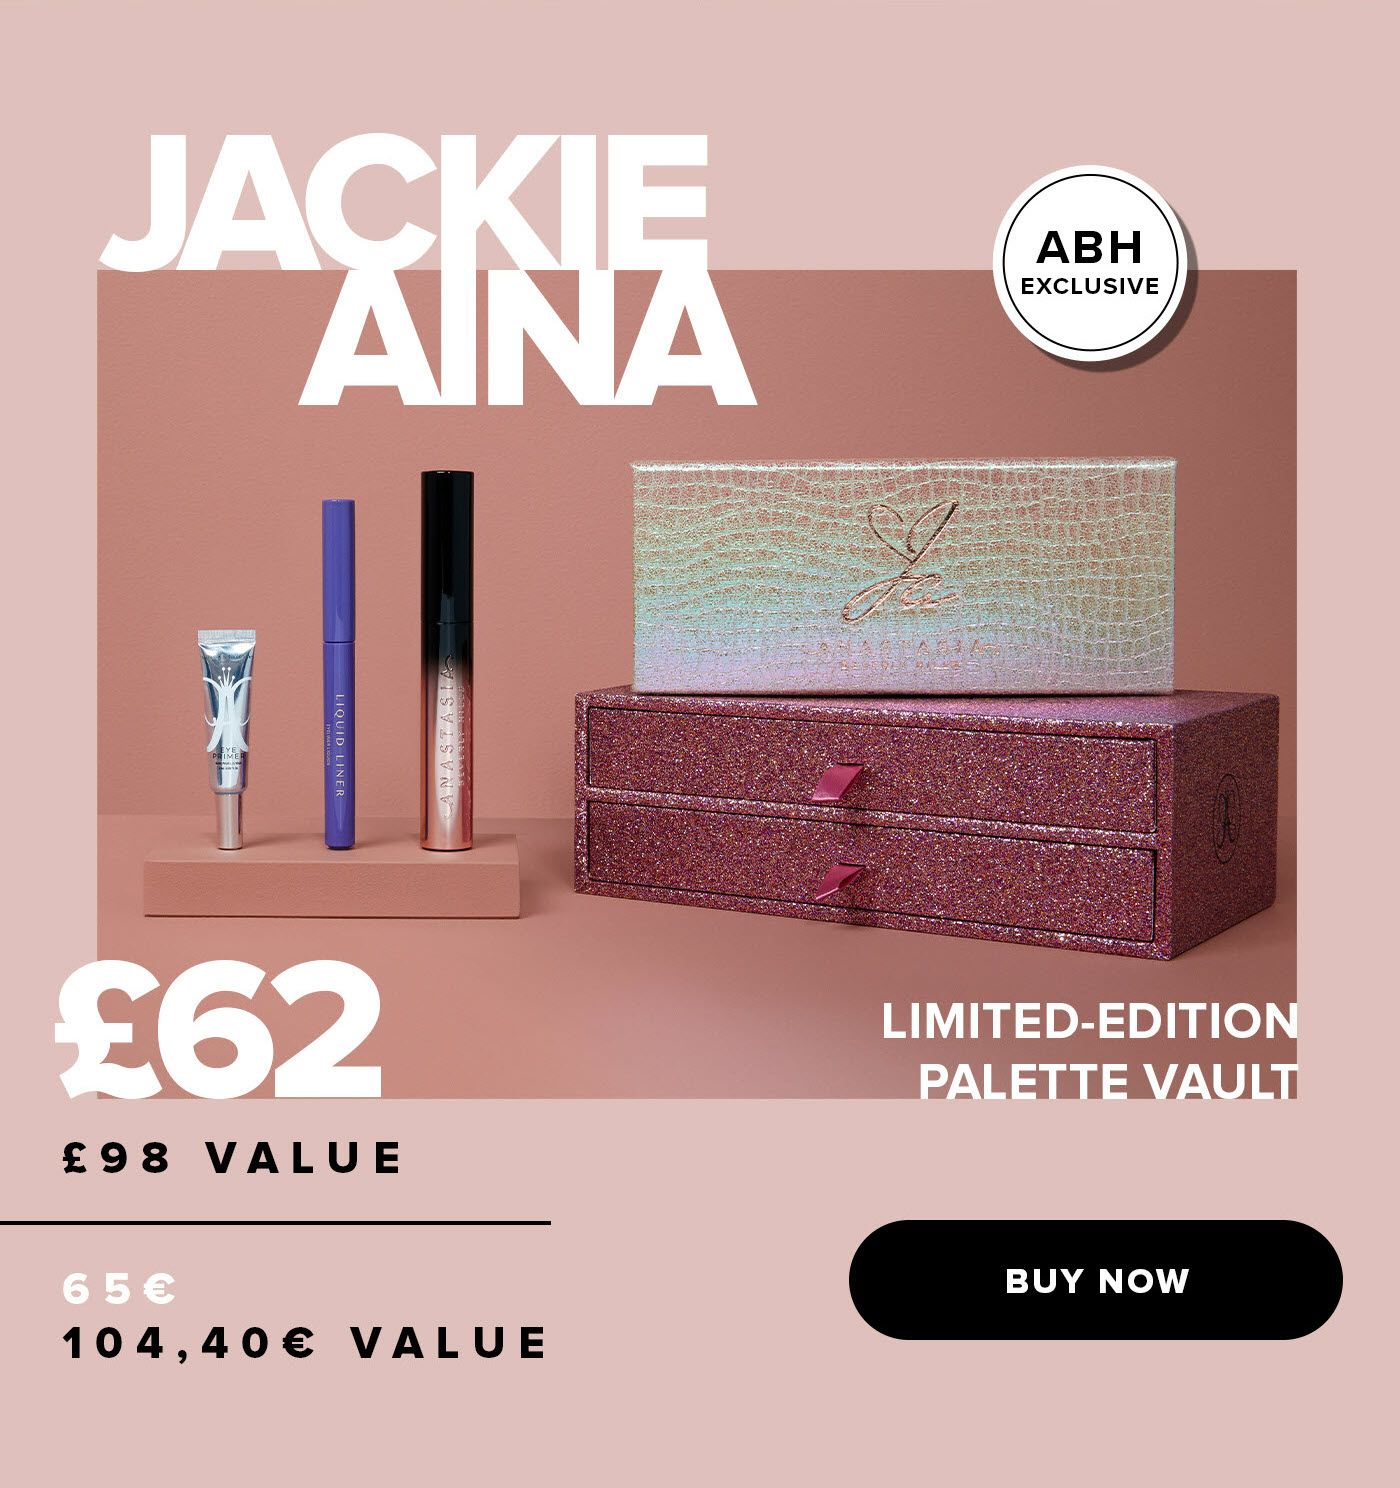 Jackie Aina Limited-Edition Palette Vault